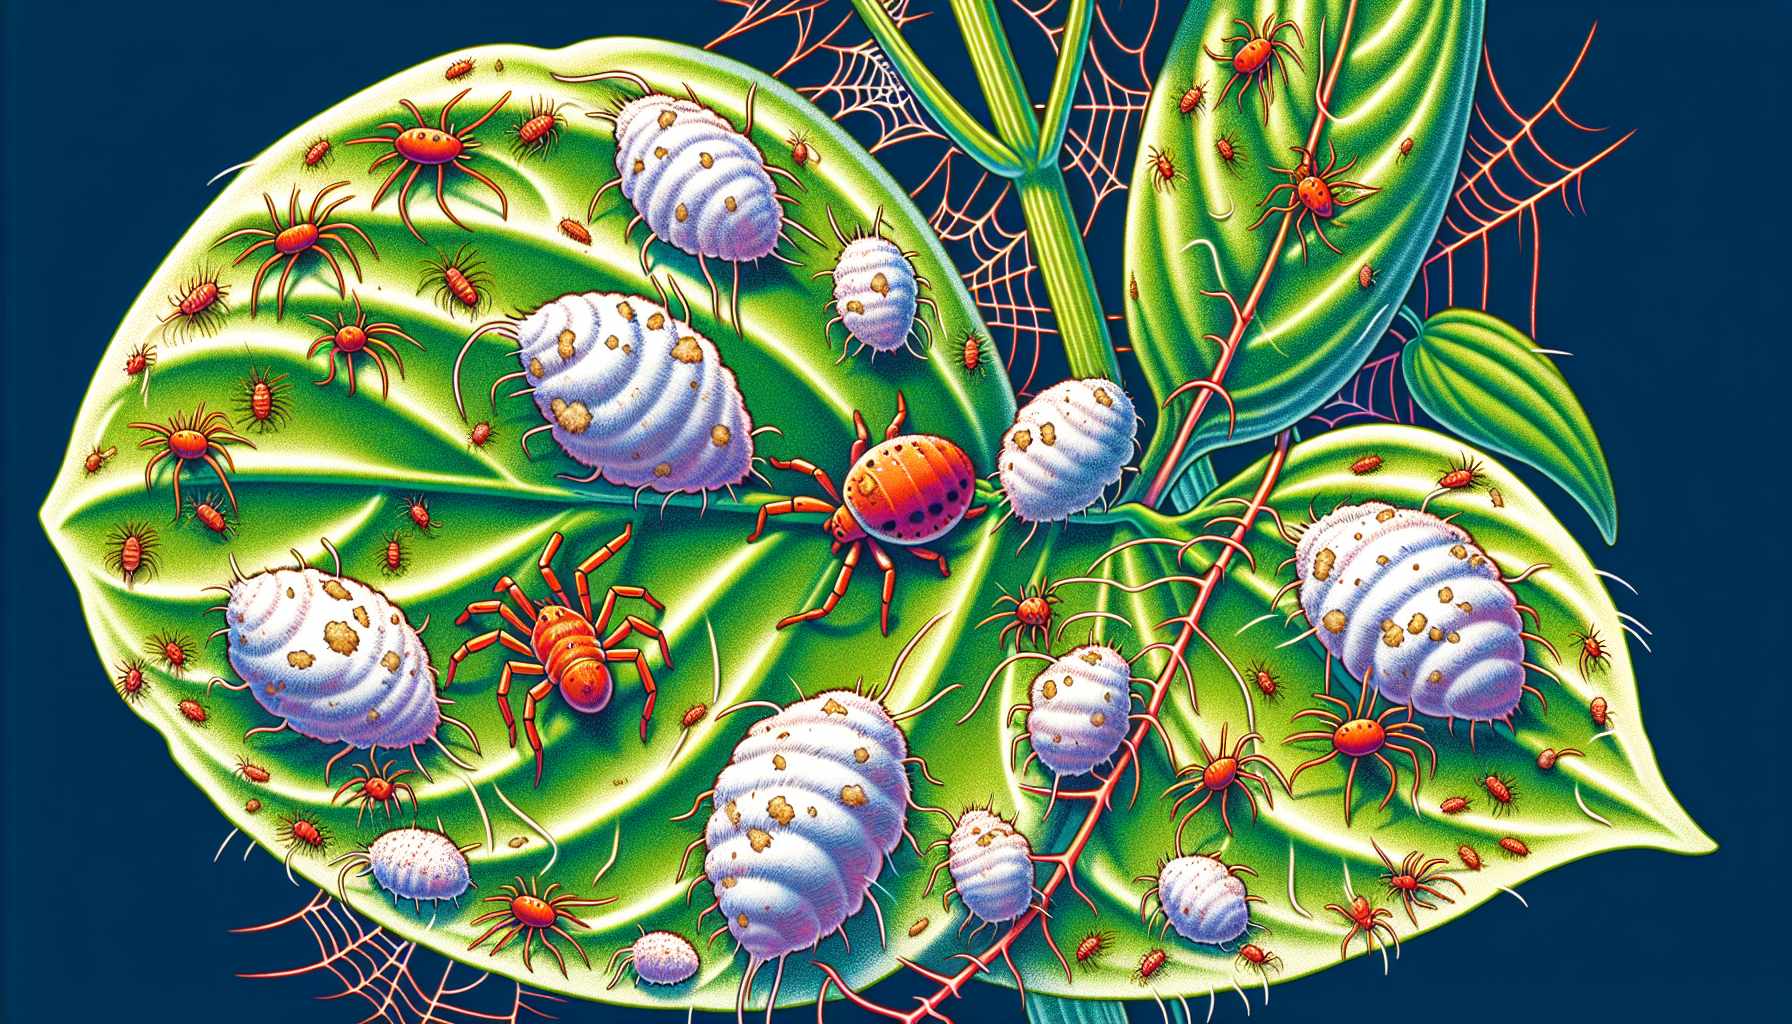 Cartoon illustration of mealybugs and spider mites on plant leaves